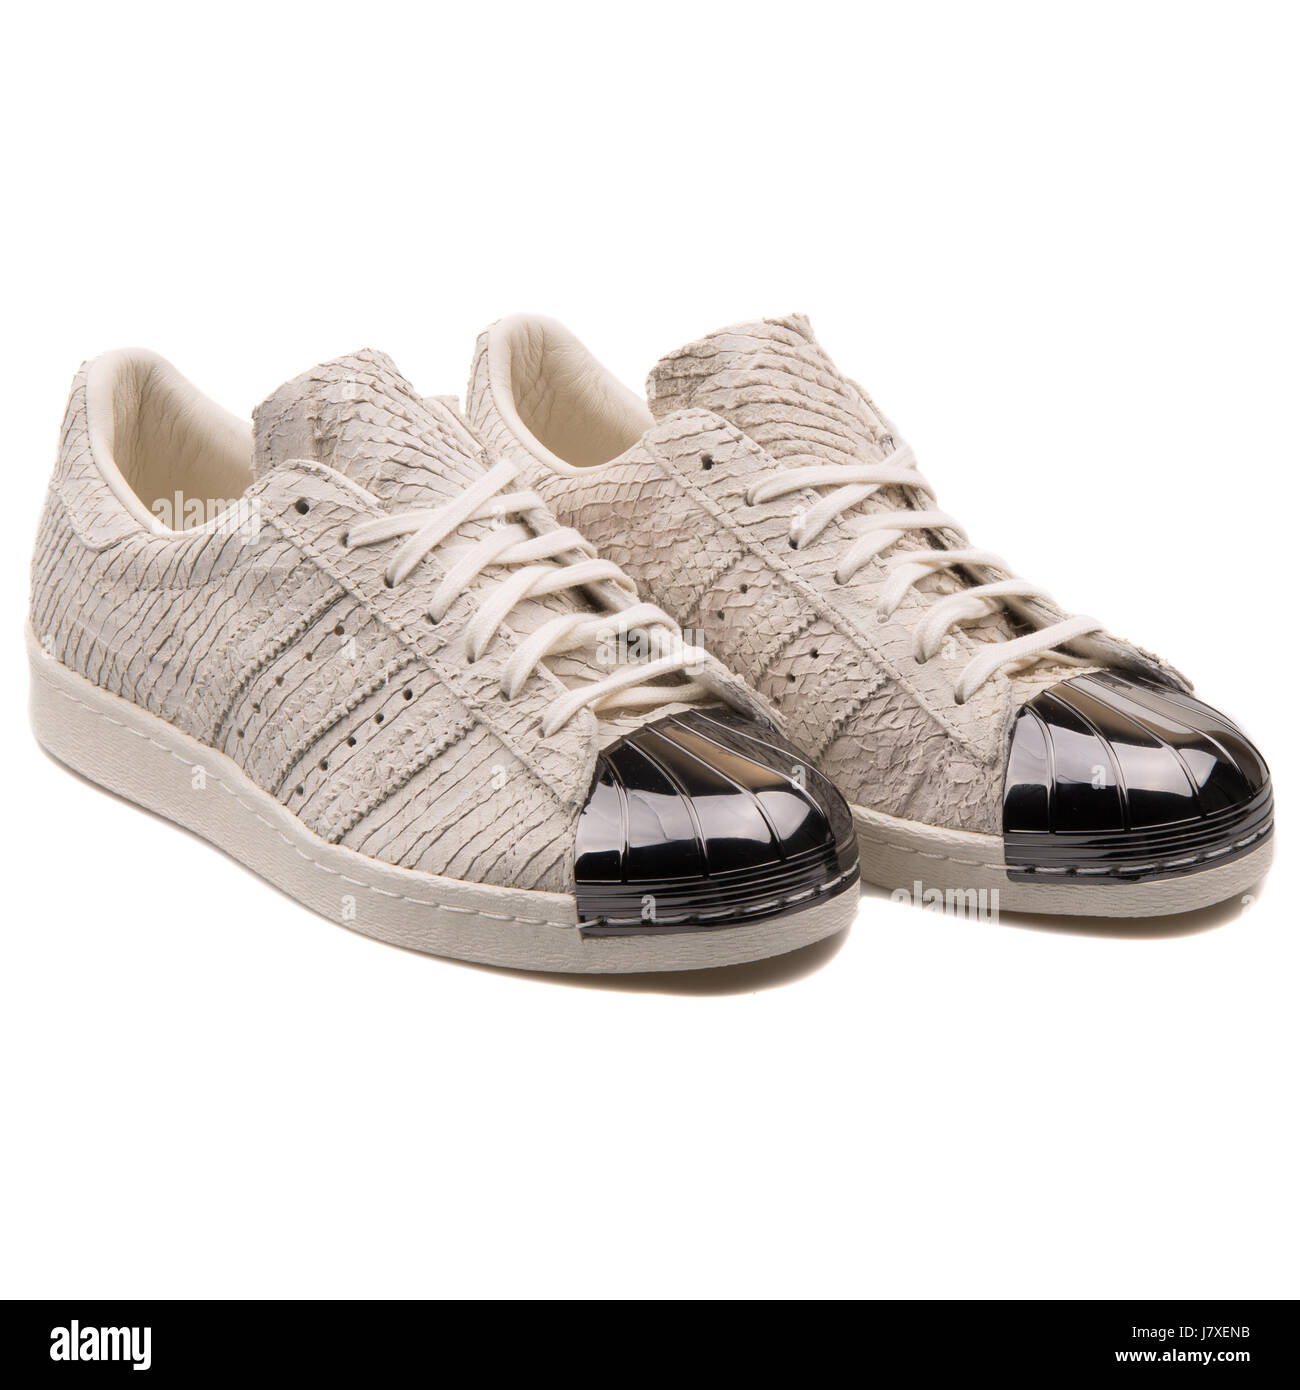 Adidas Superstar 80er Metal Toe W Frauen klassisches weißes Leder mit Snake  Skin Muster Sneakers - S82483 Stockfotografie - Alamy